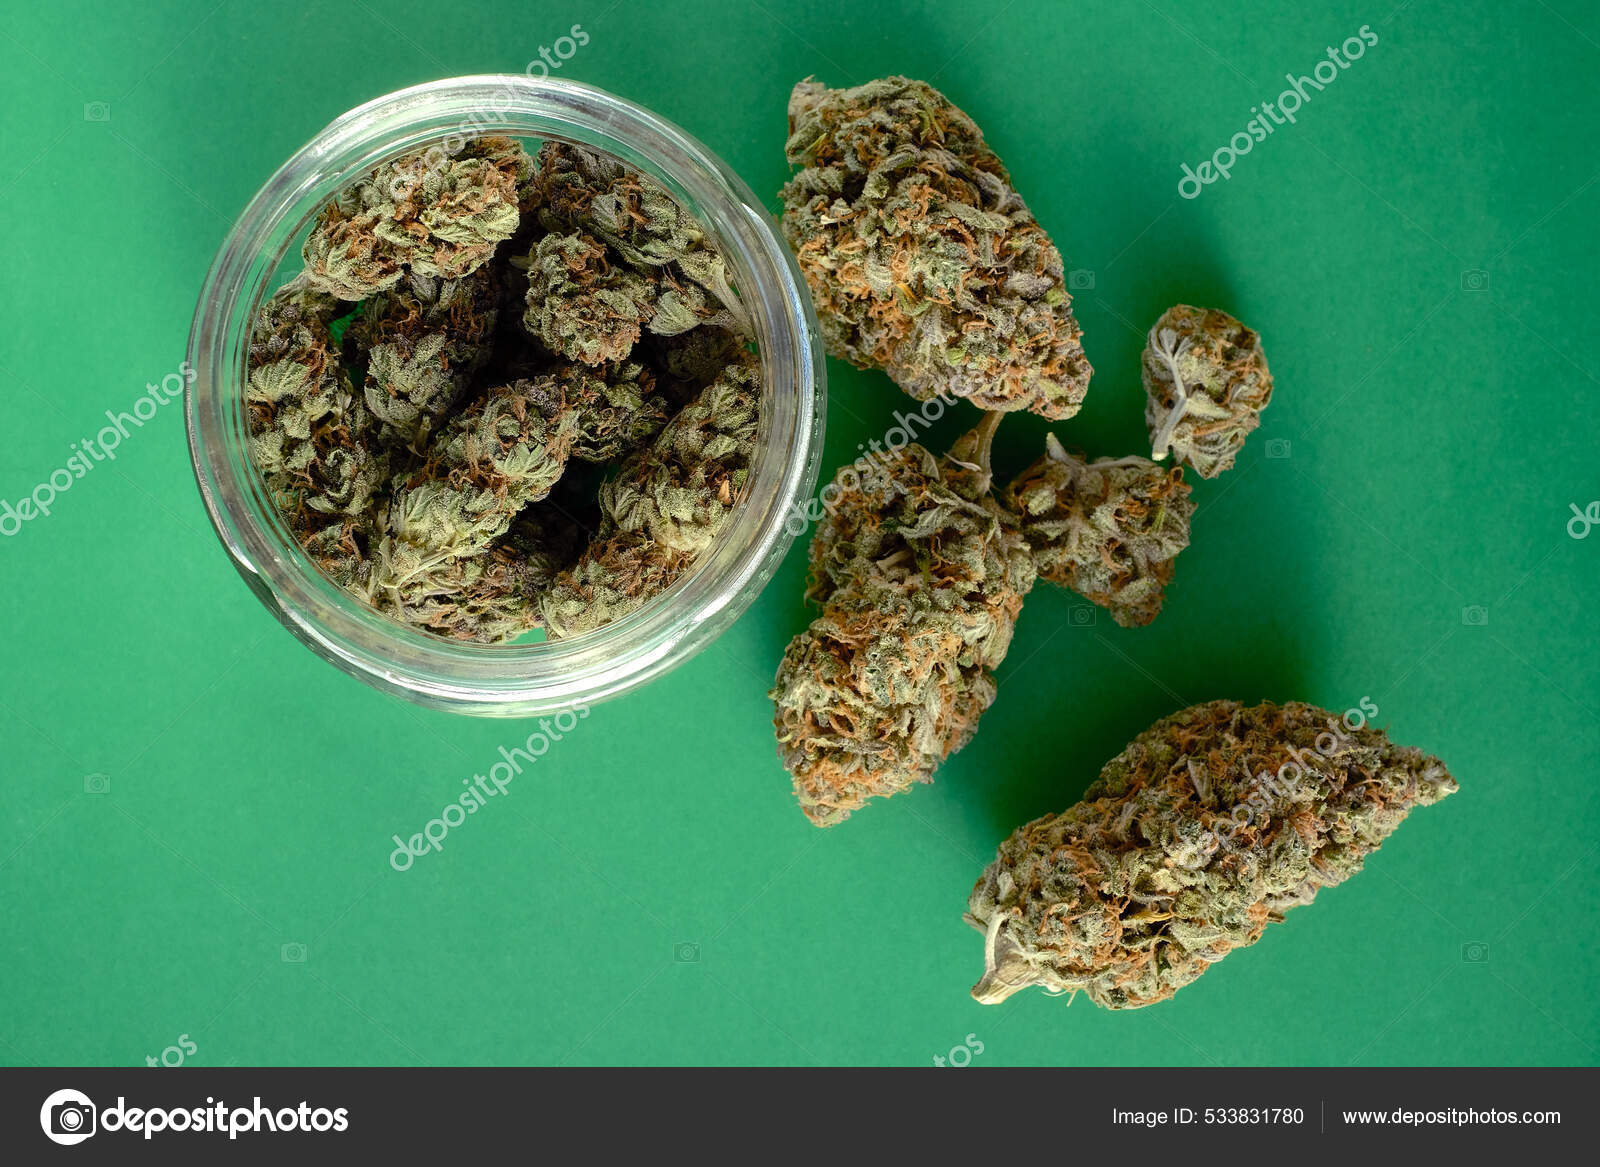 Glass Smoking Pipe And Marijuana Buds Close-up. Photograph by